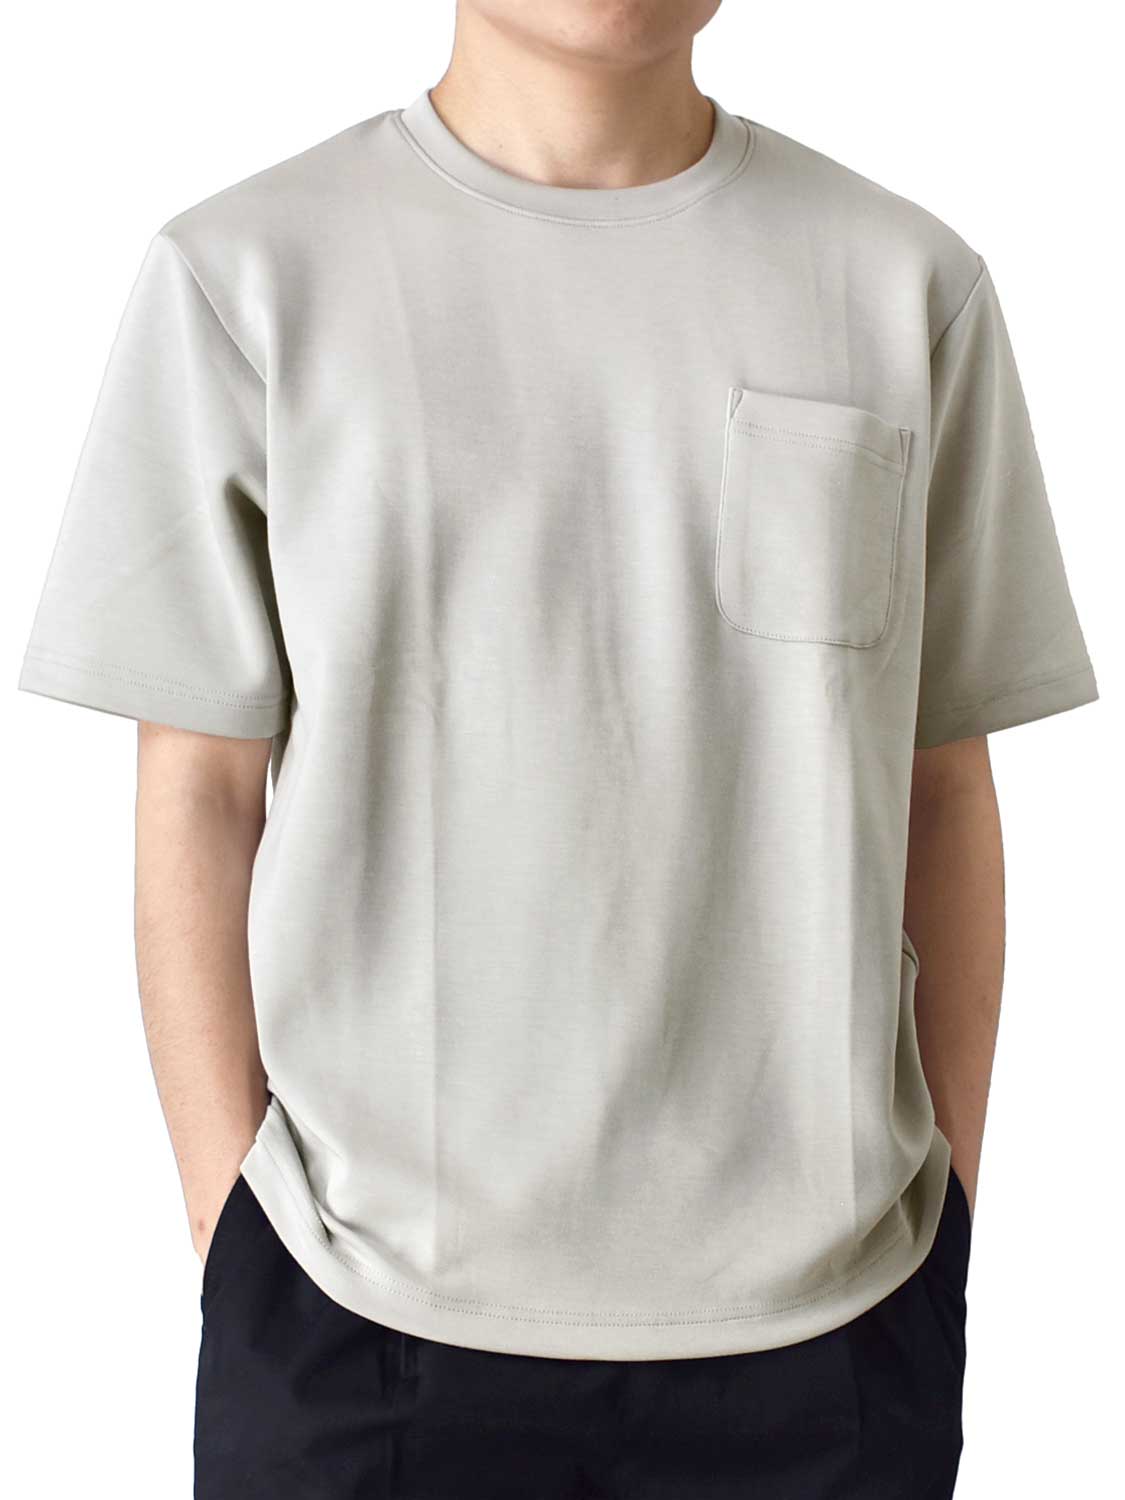 Tシャツ メンズ 接触冷感 ストレッチ 胸ポケット 送料無料 通販Y 半袖